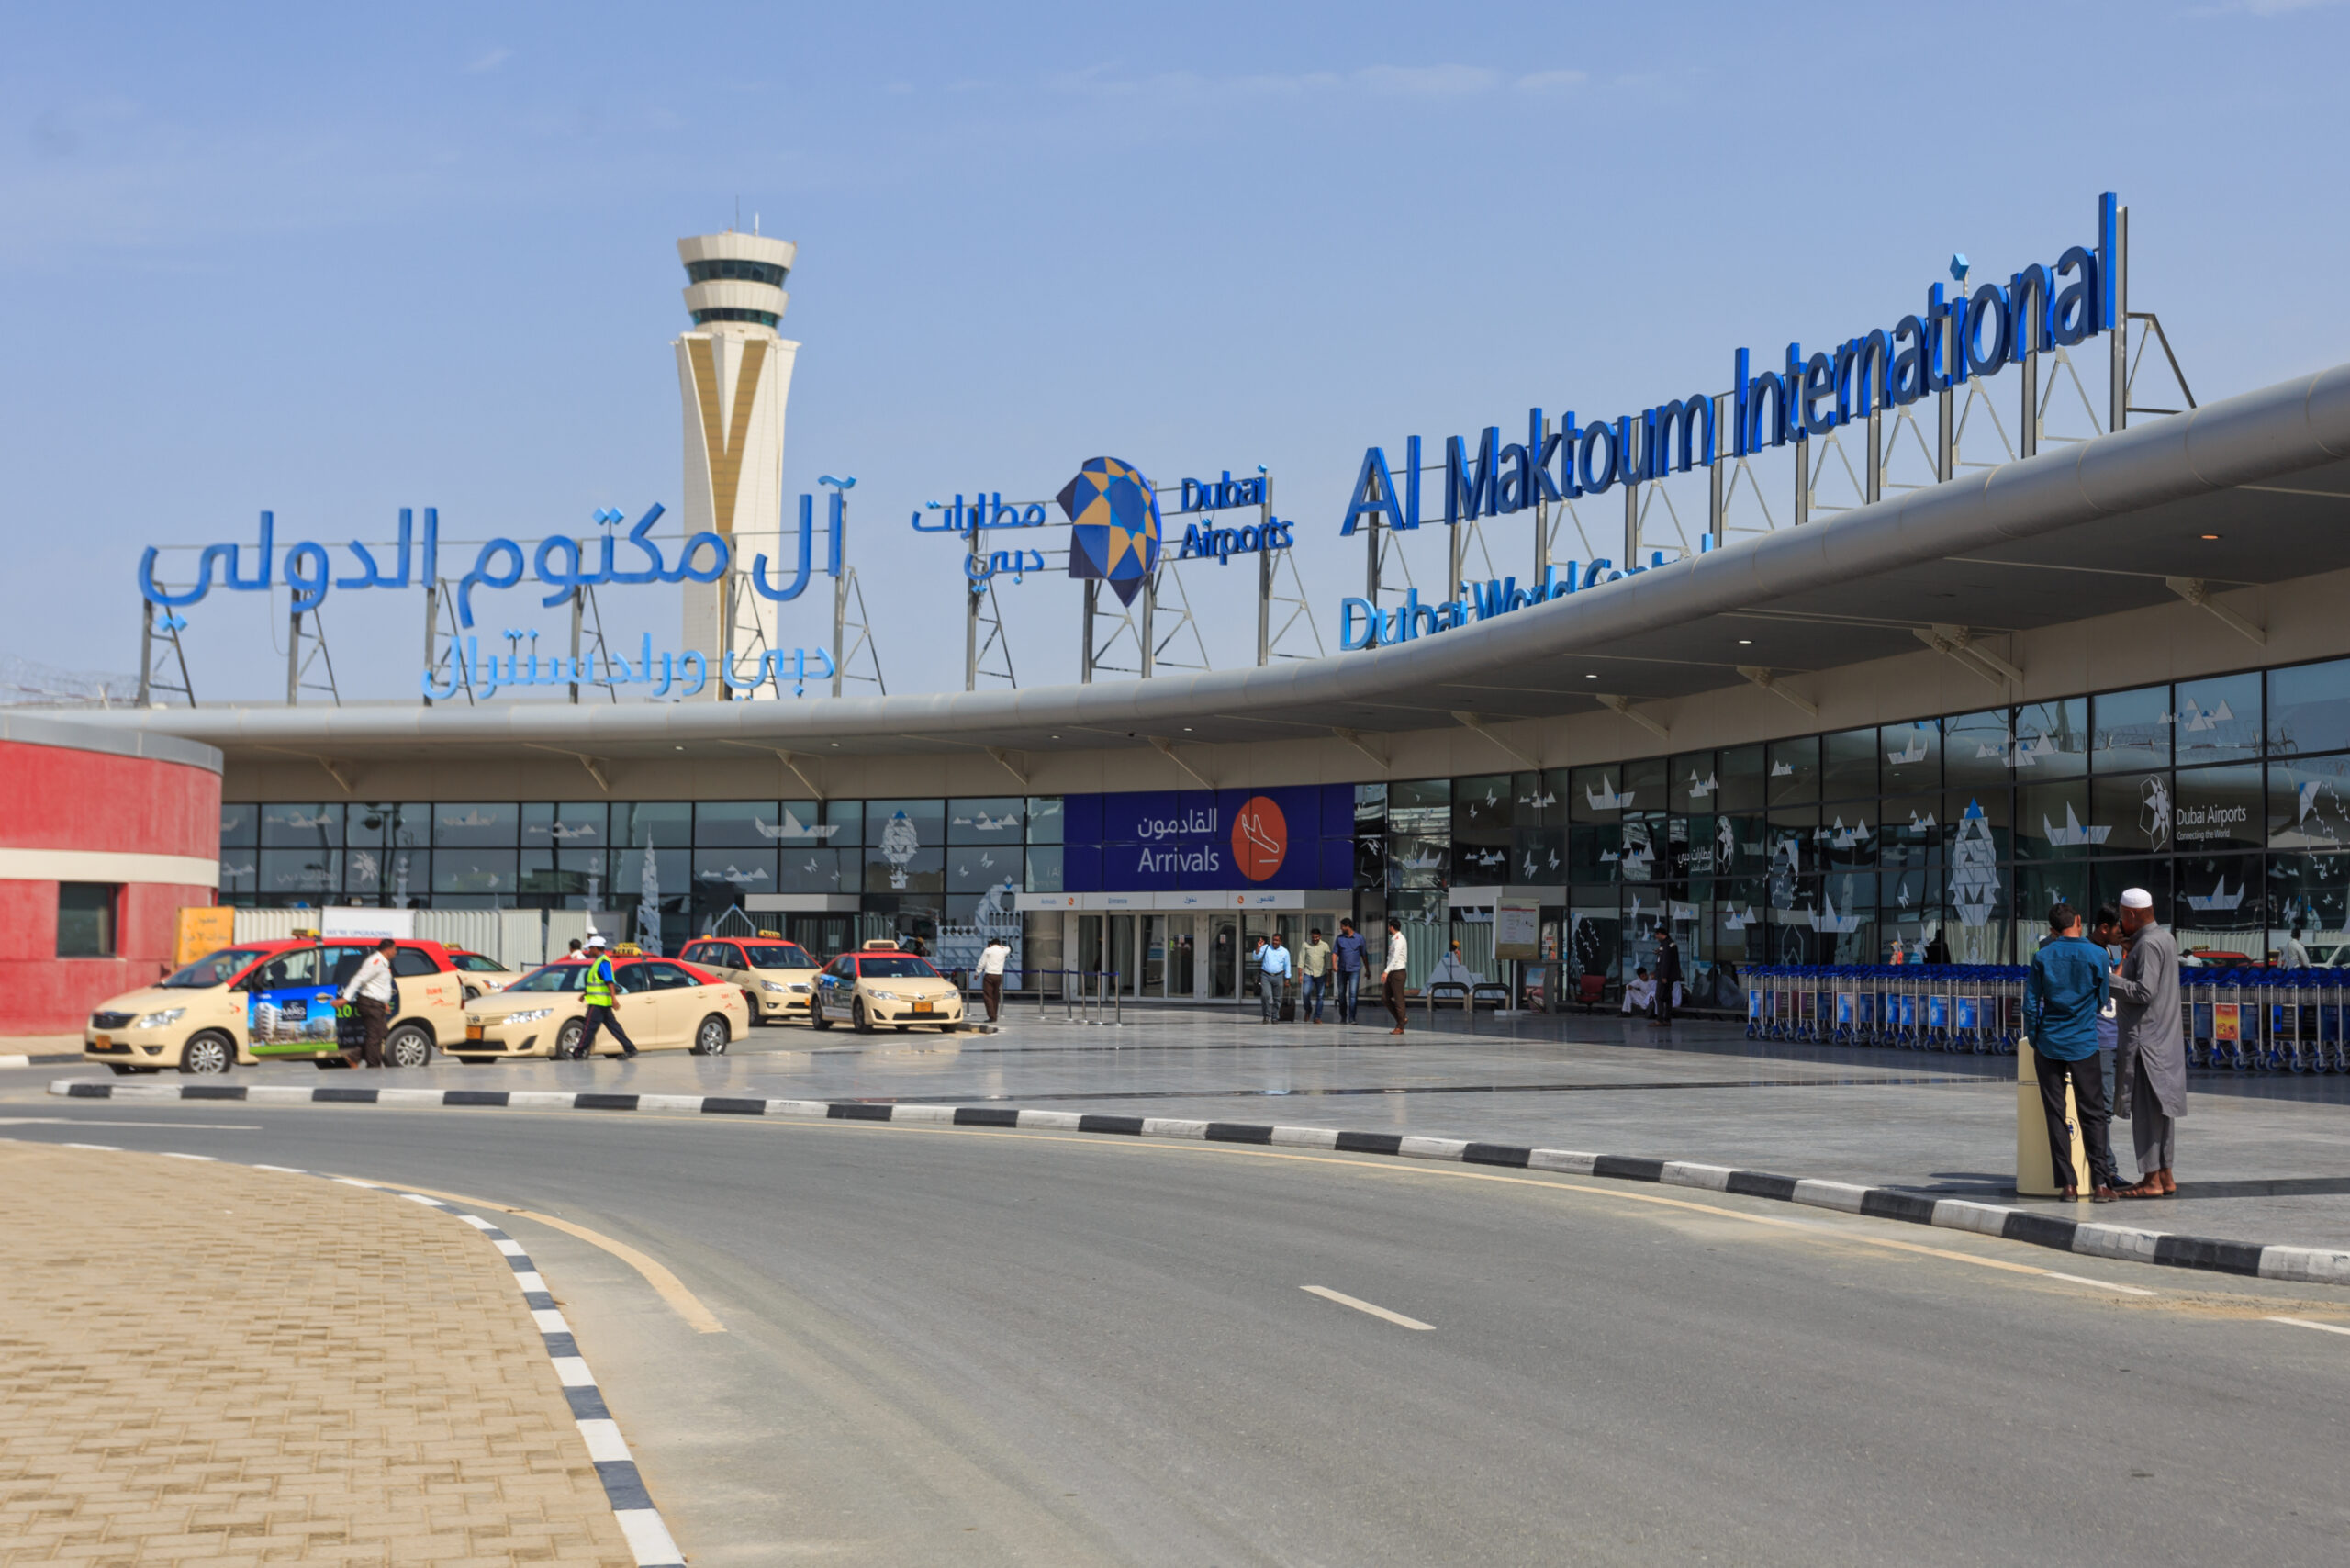 Dubai Airports - Al Maktoum International Airport